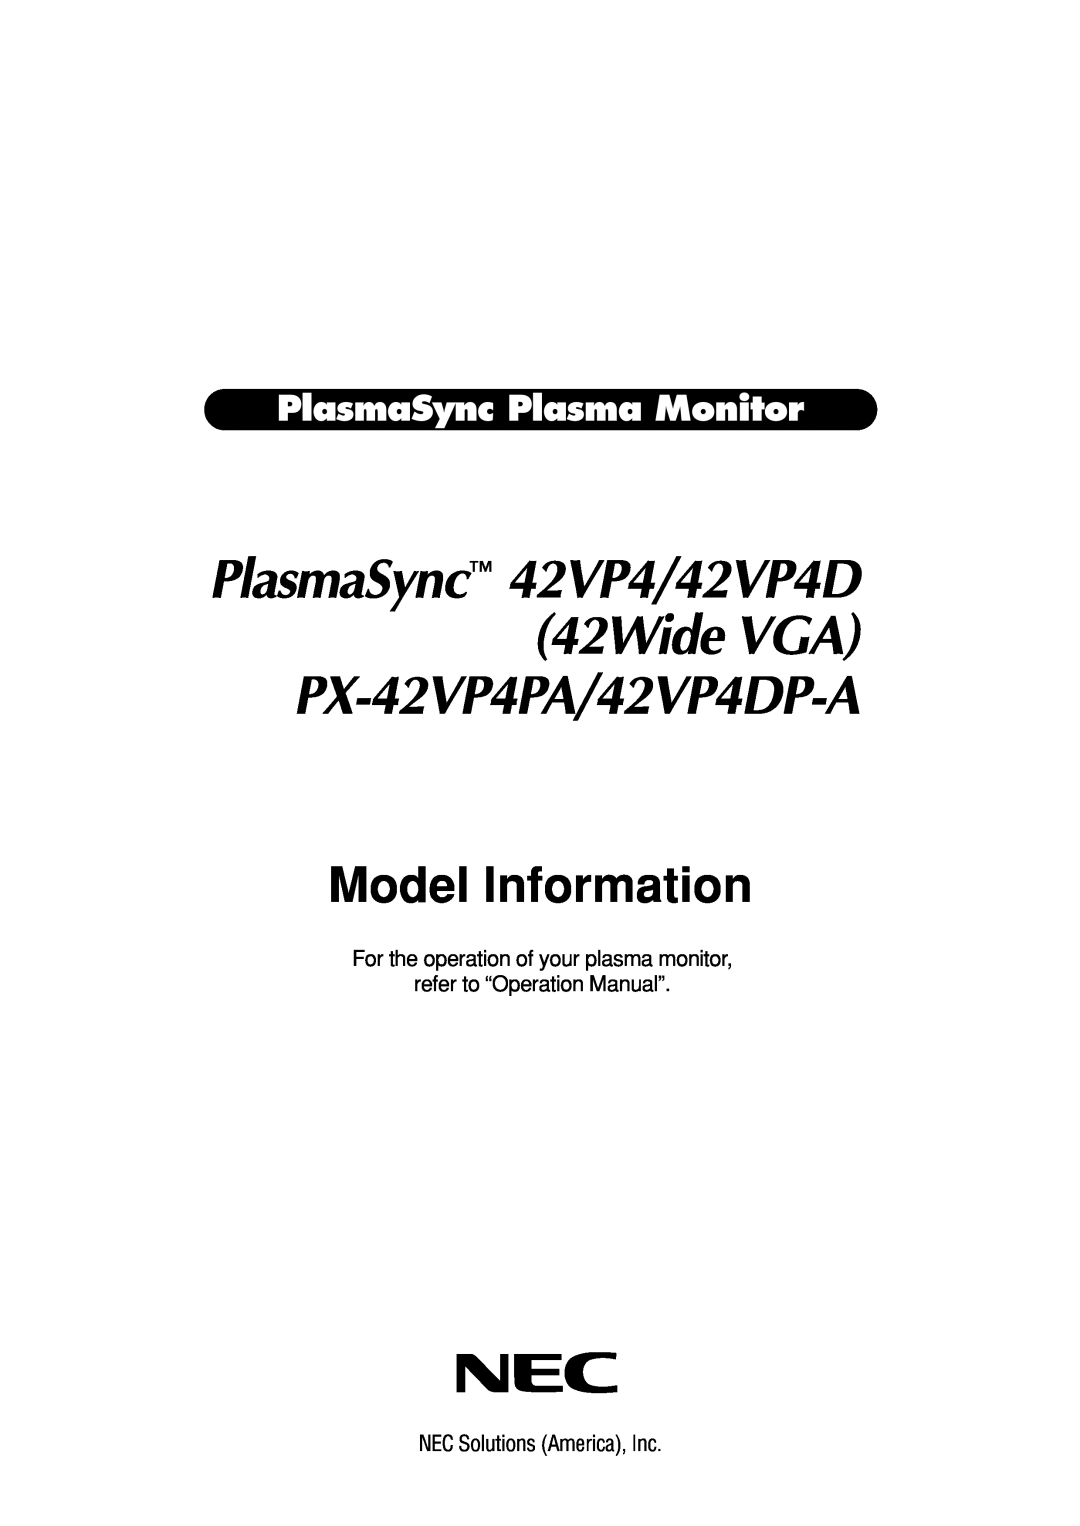 NEC PX-42VP4DP-A, PX-42VP4PA operation manual Model Information, PlasmaSync Plasma Monitor, NEC Solutions America, Inc 